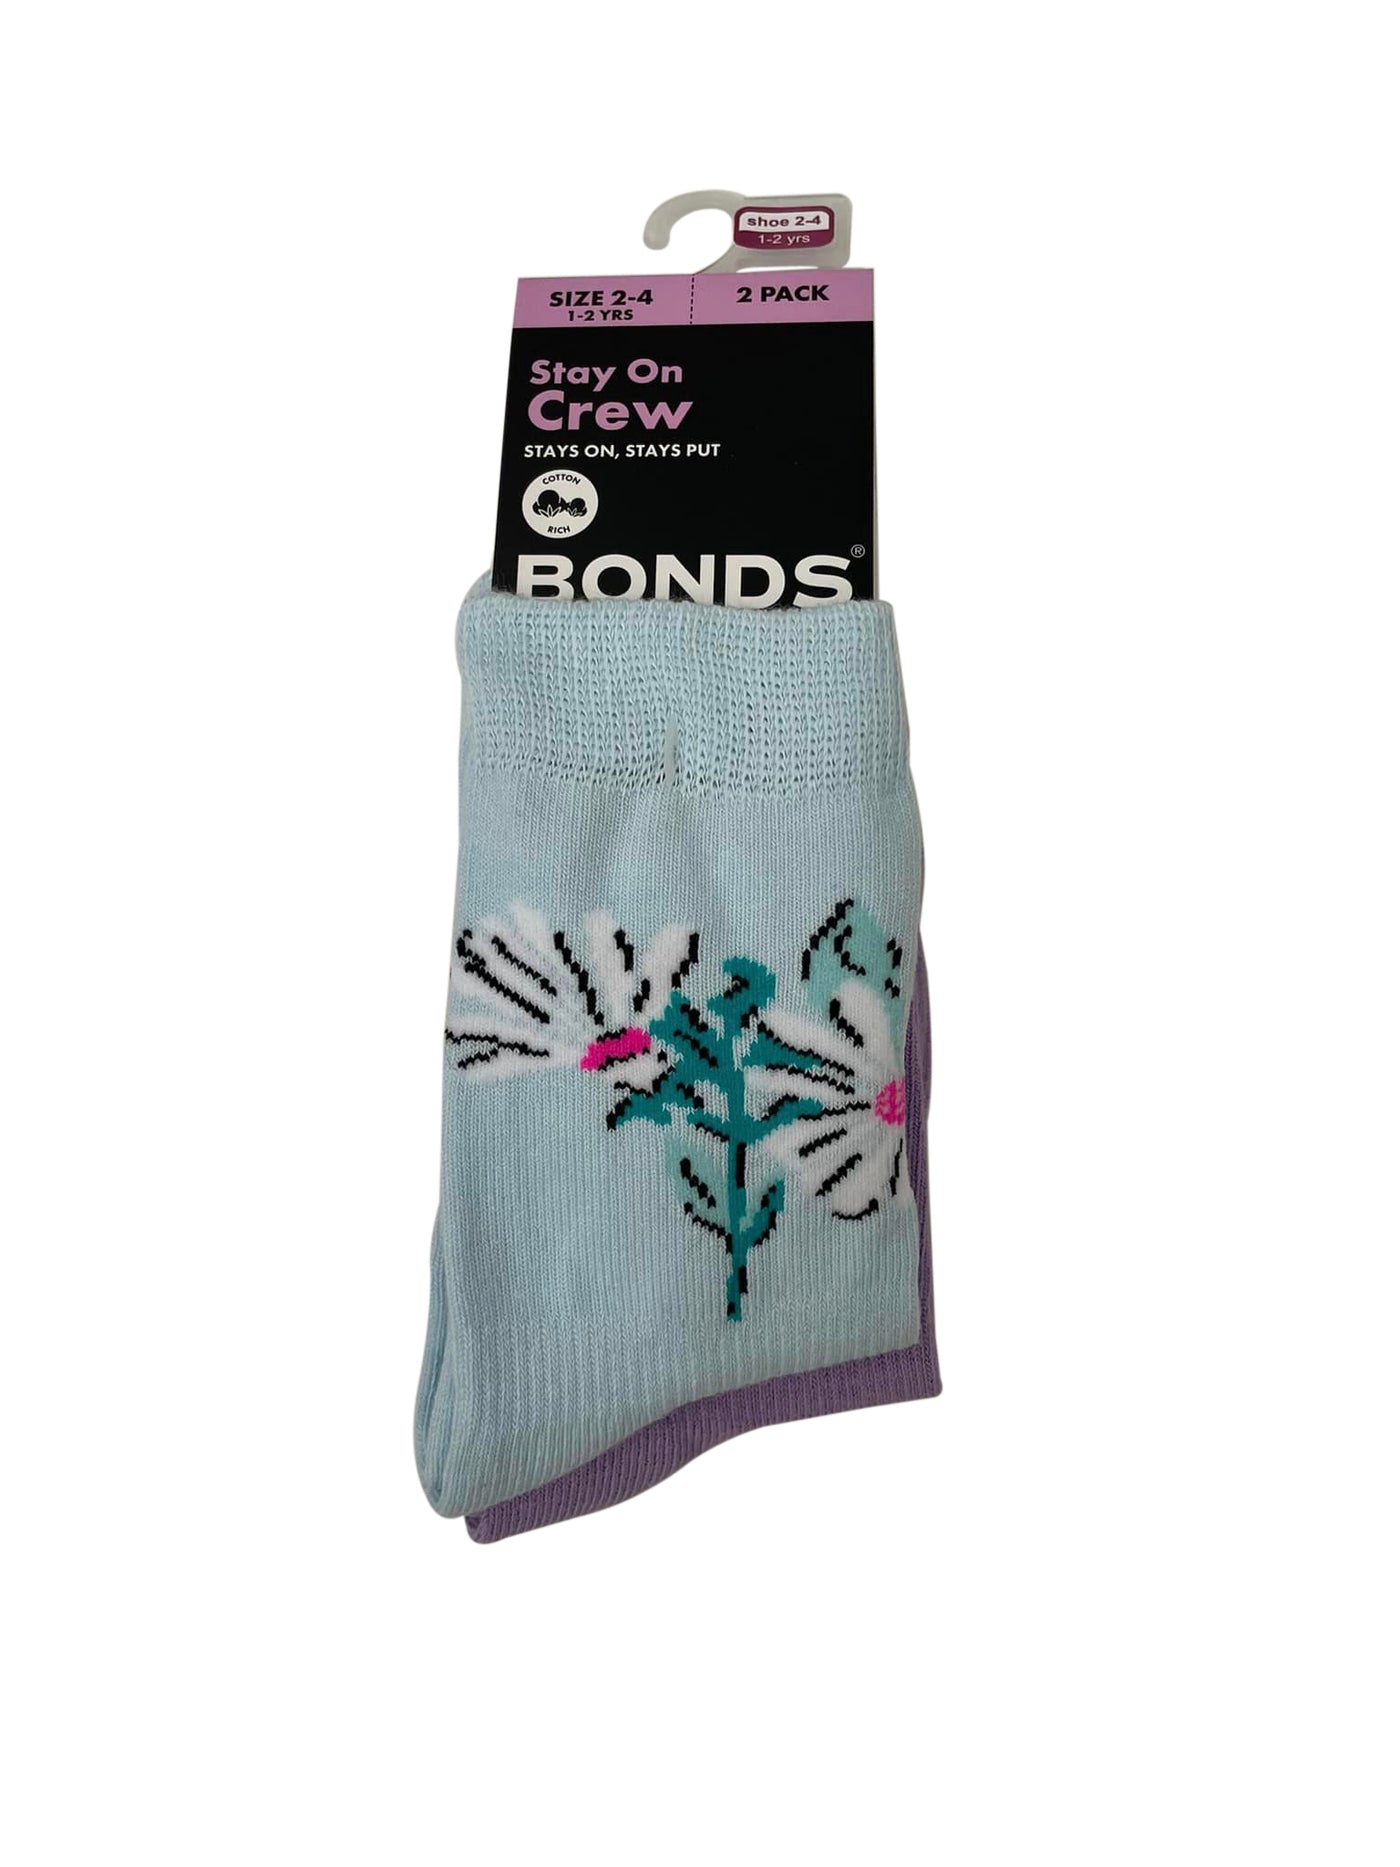 Bonds Baby Stay On Crew Socks 2 Pack - Flower Light Blue/Lilac